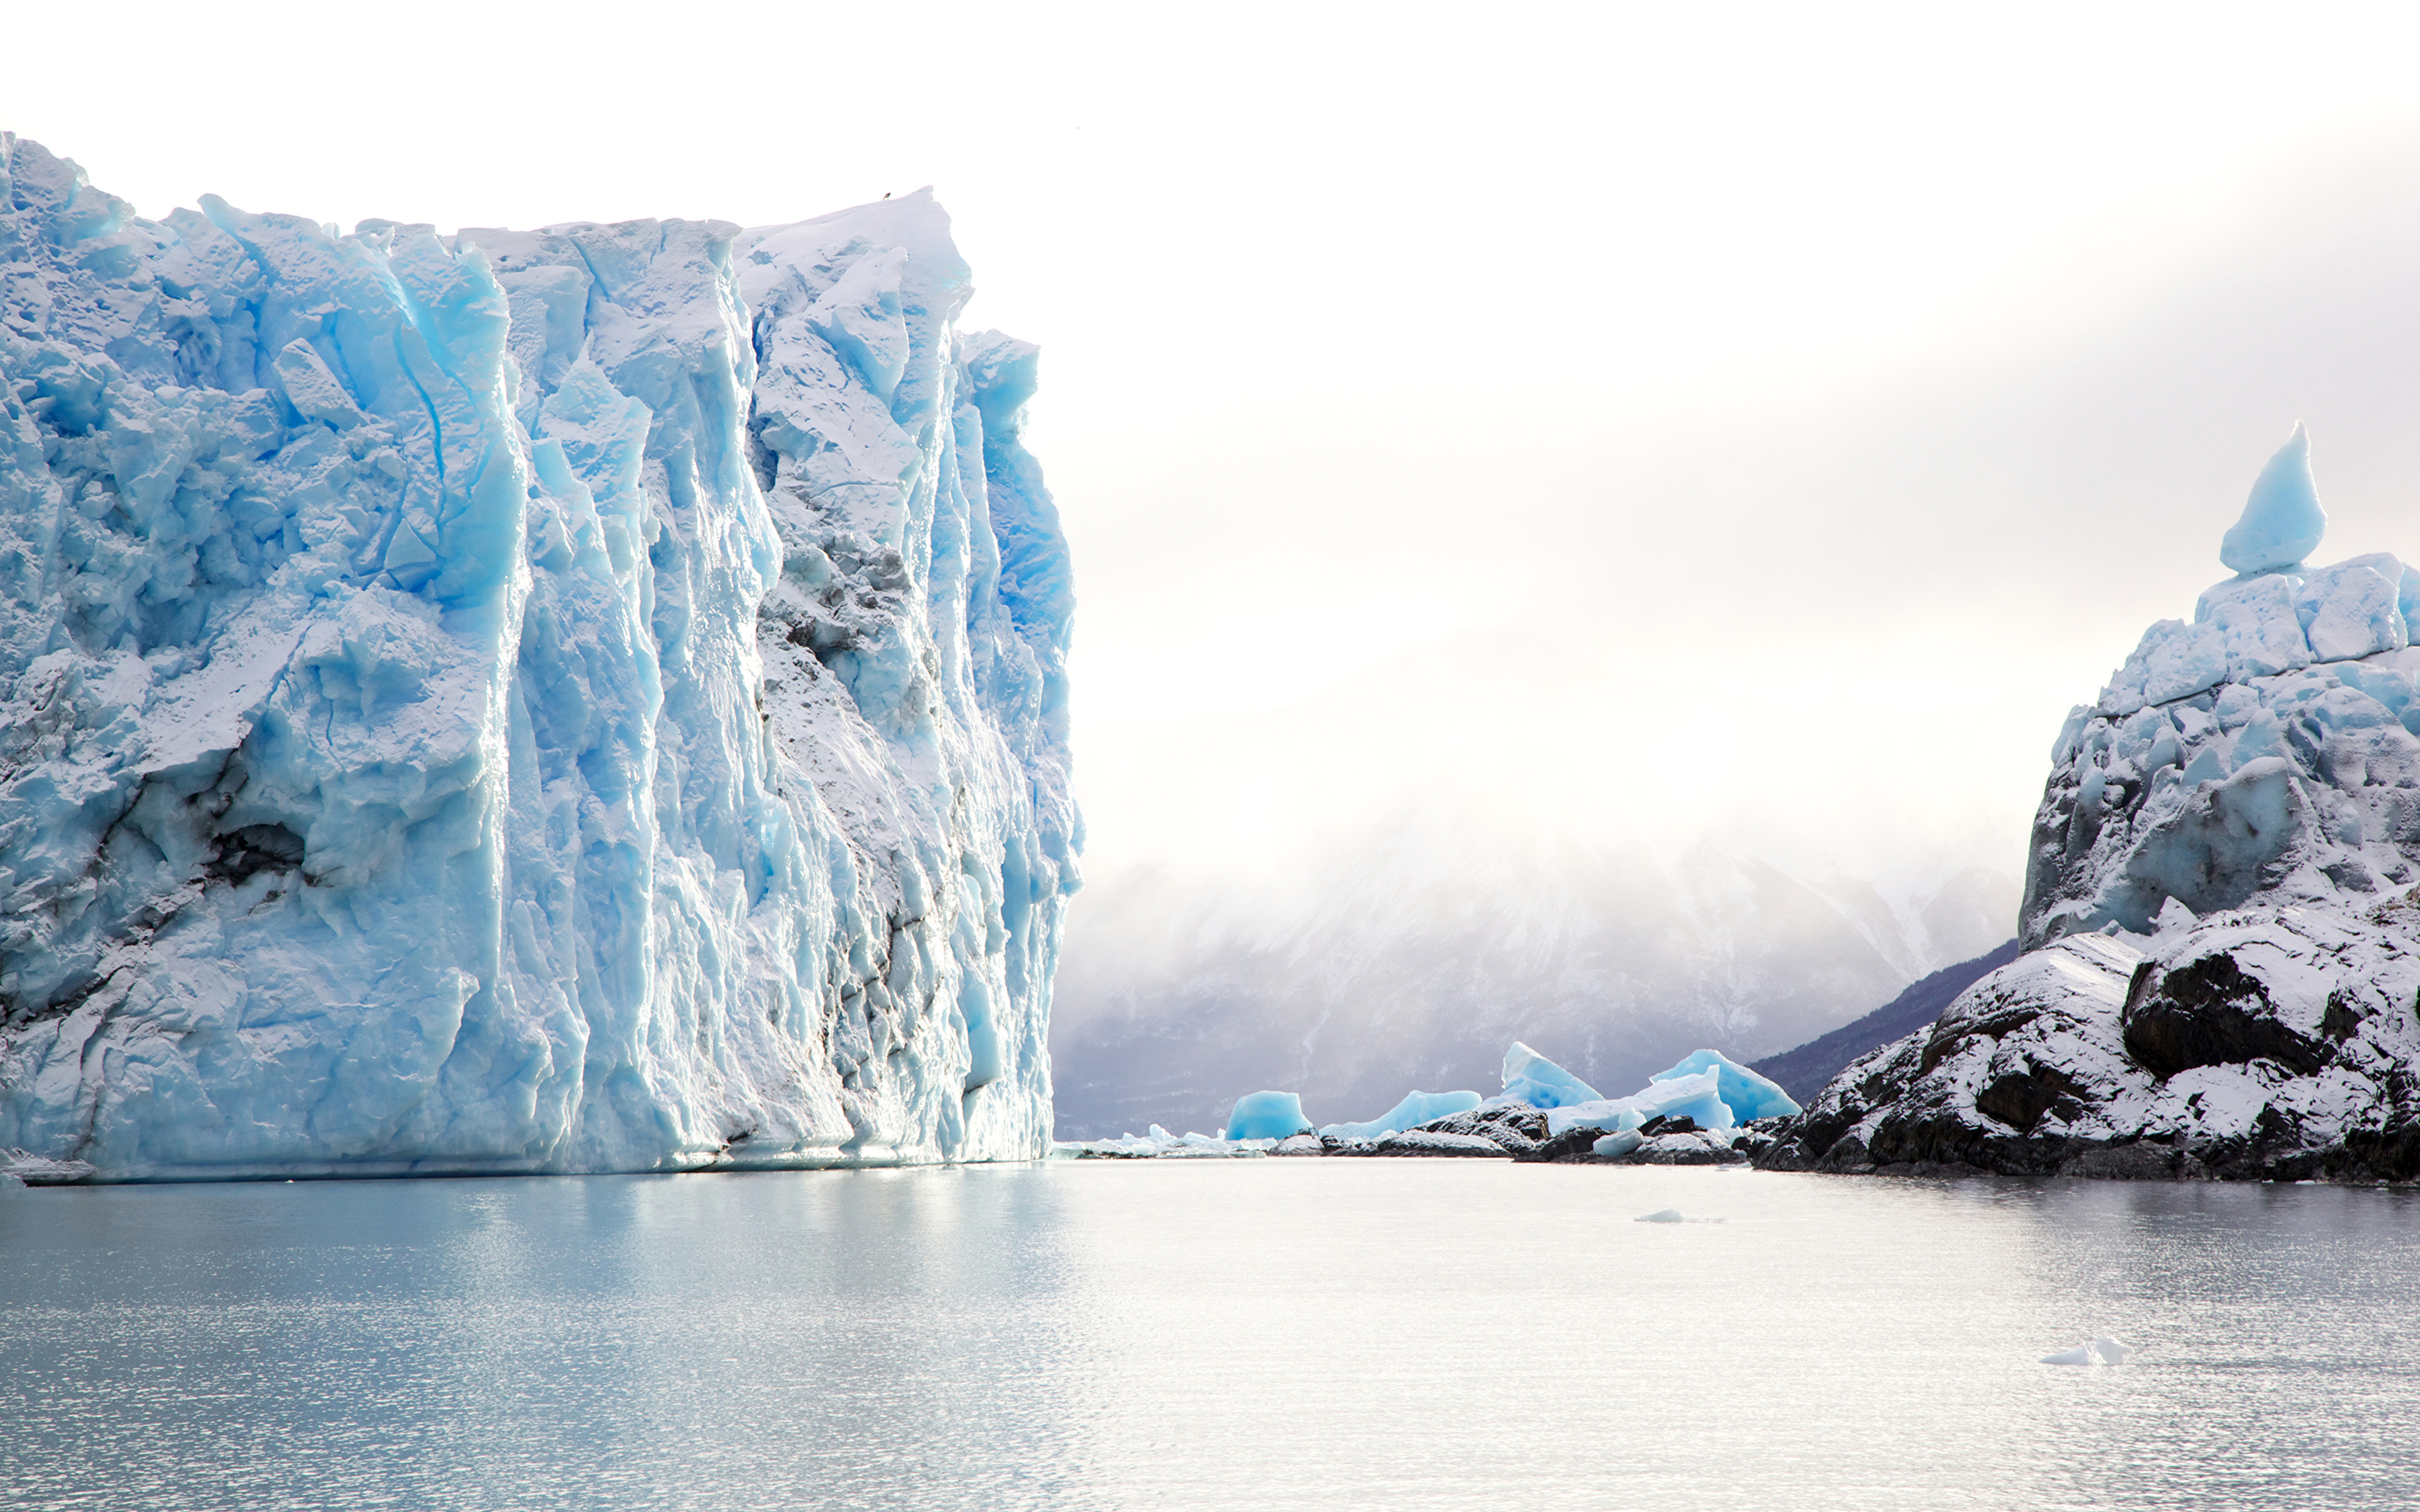 Wallpapers aisberg ocean argentina on the desktop